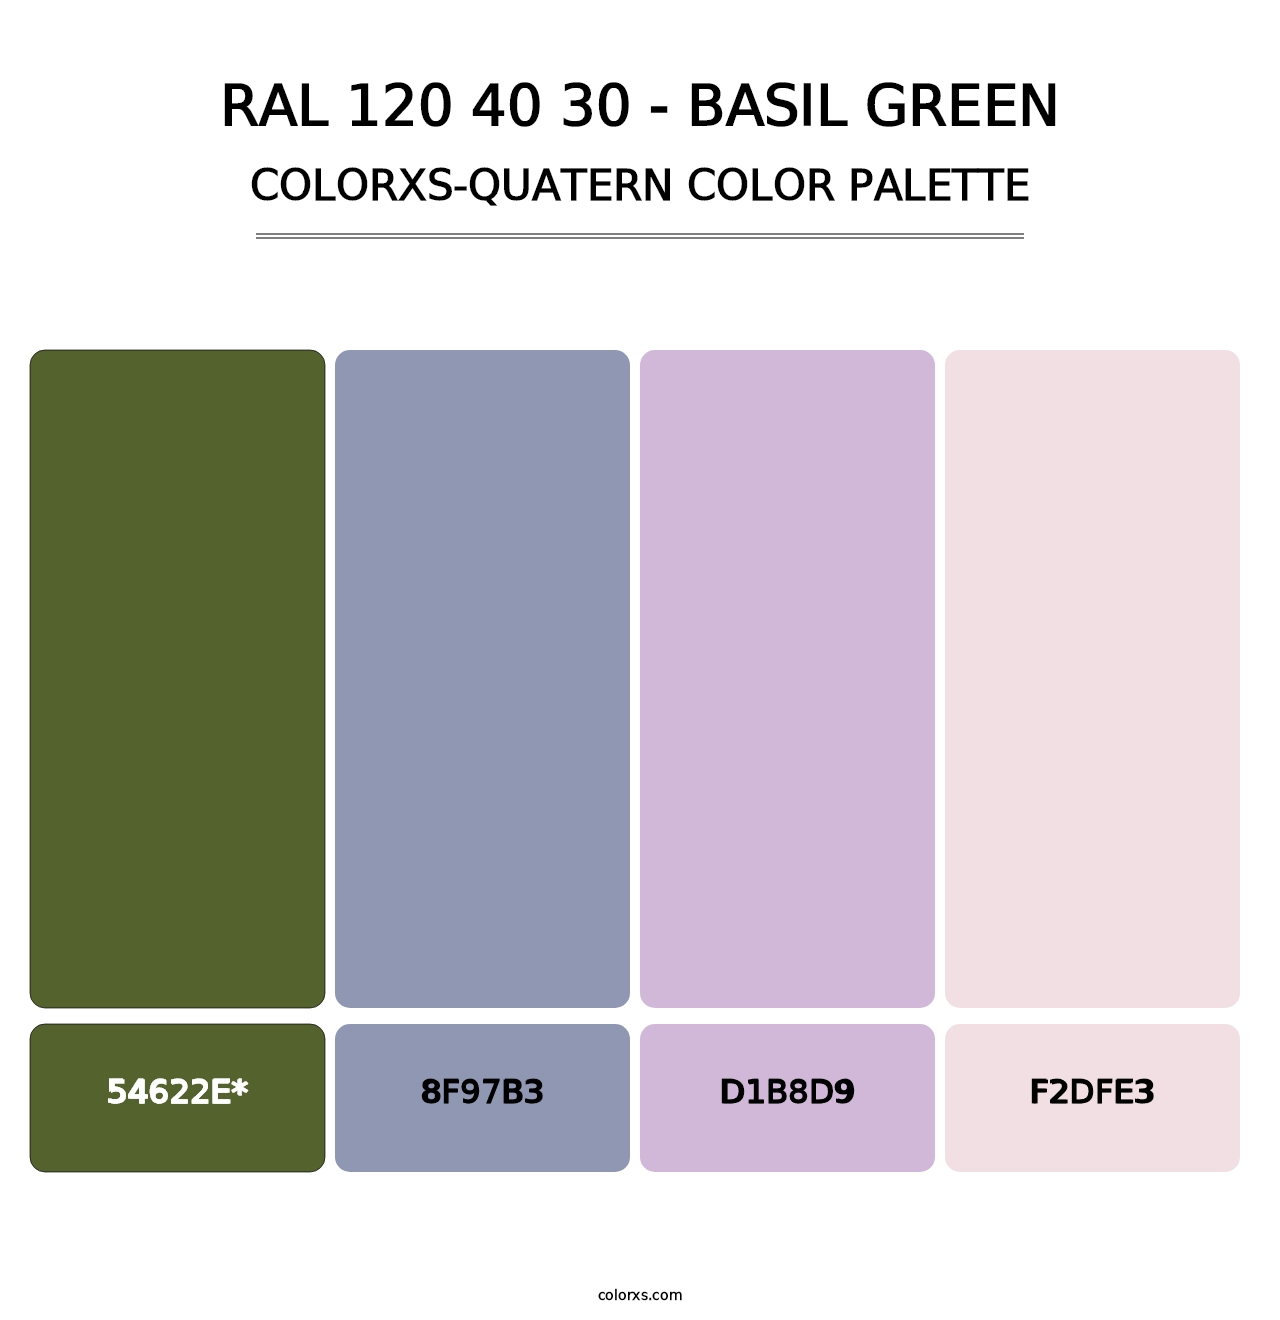 RAL 120 40 30 - Basil Green - Colorxs Quatern Palette